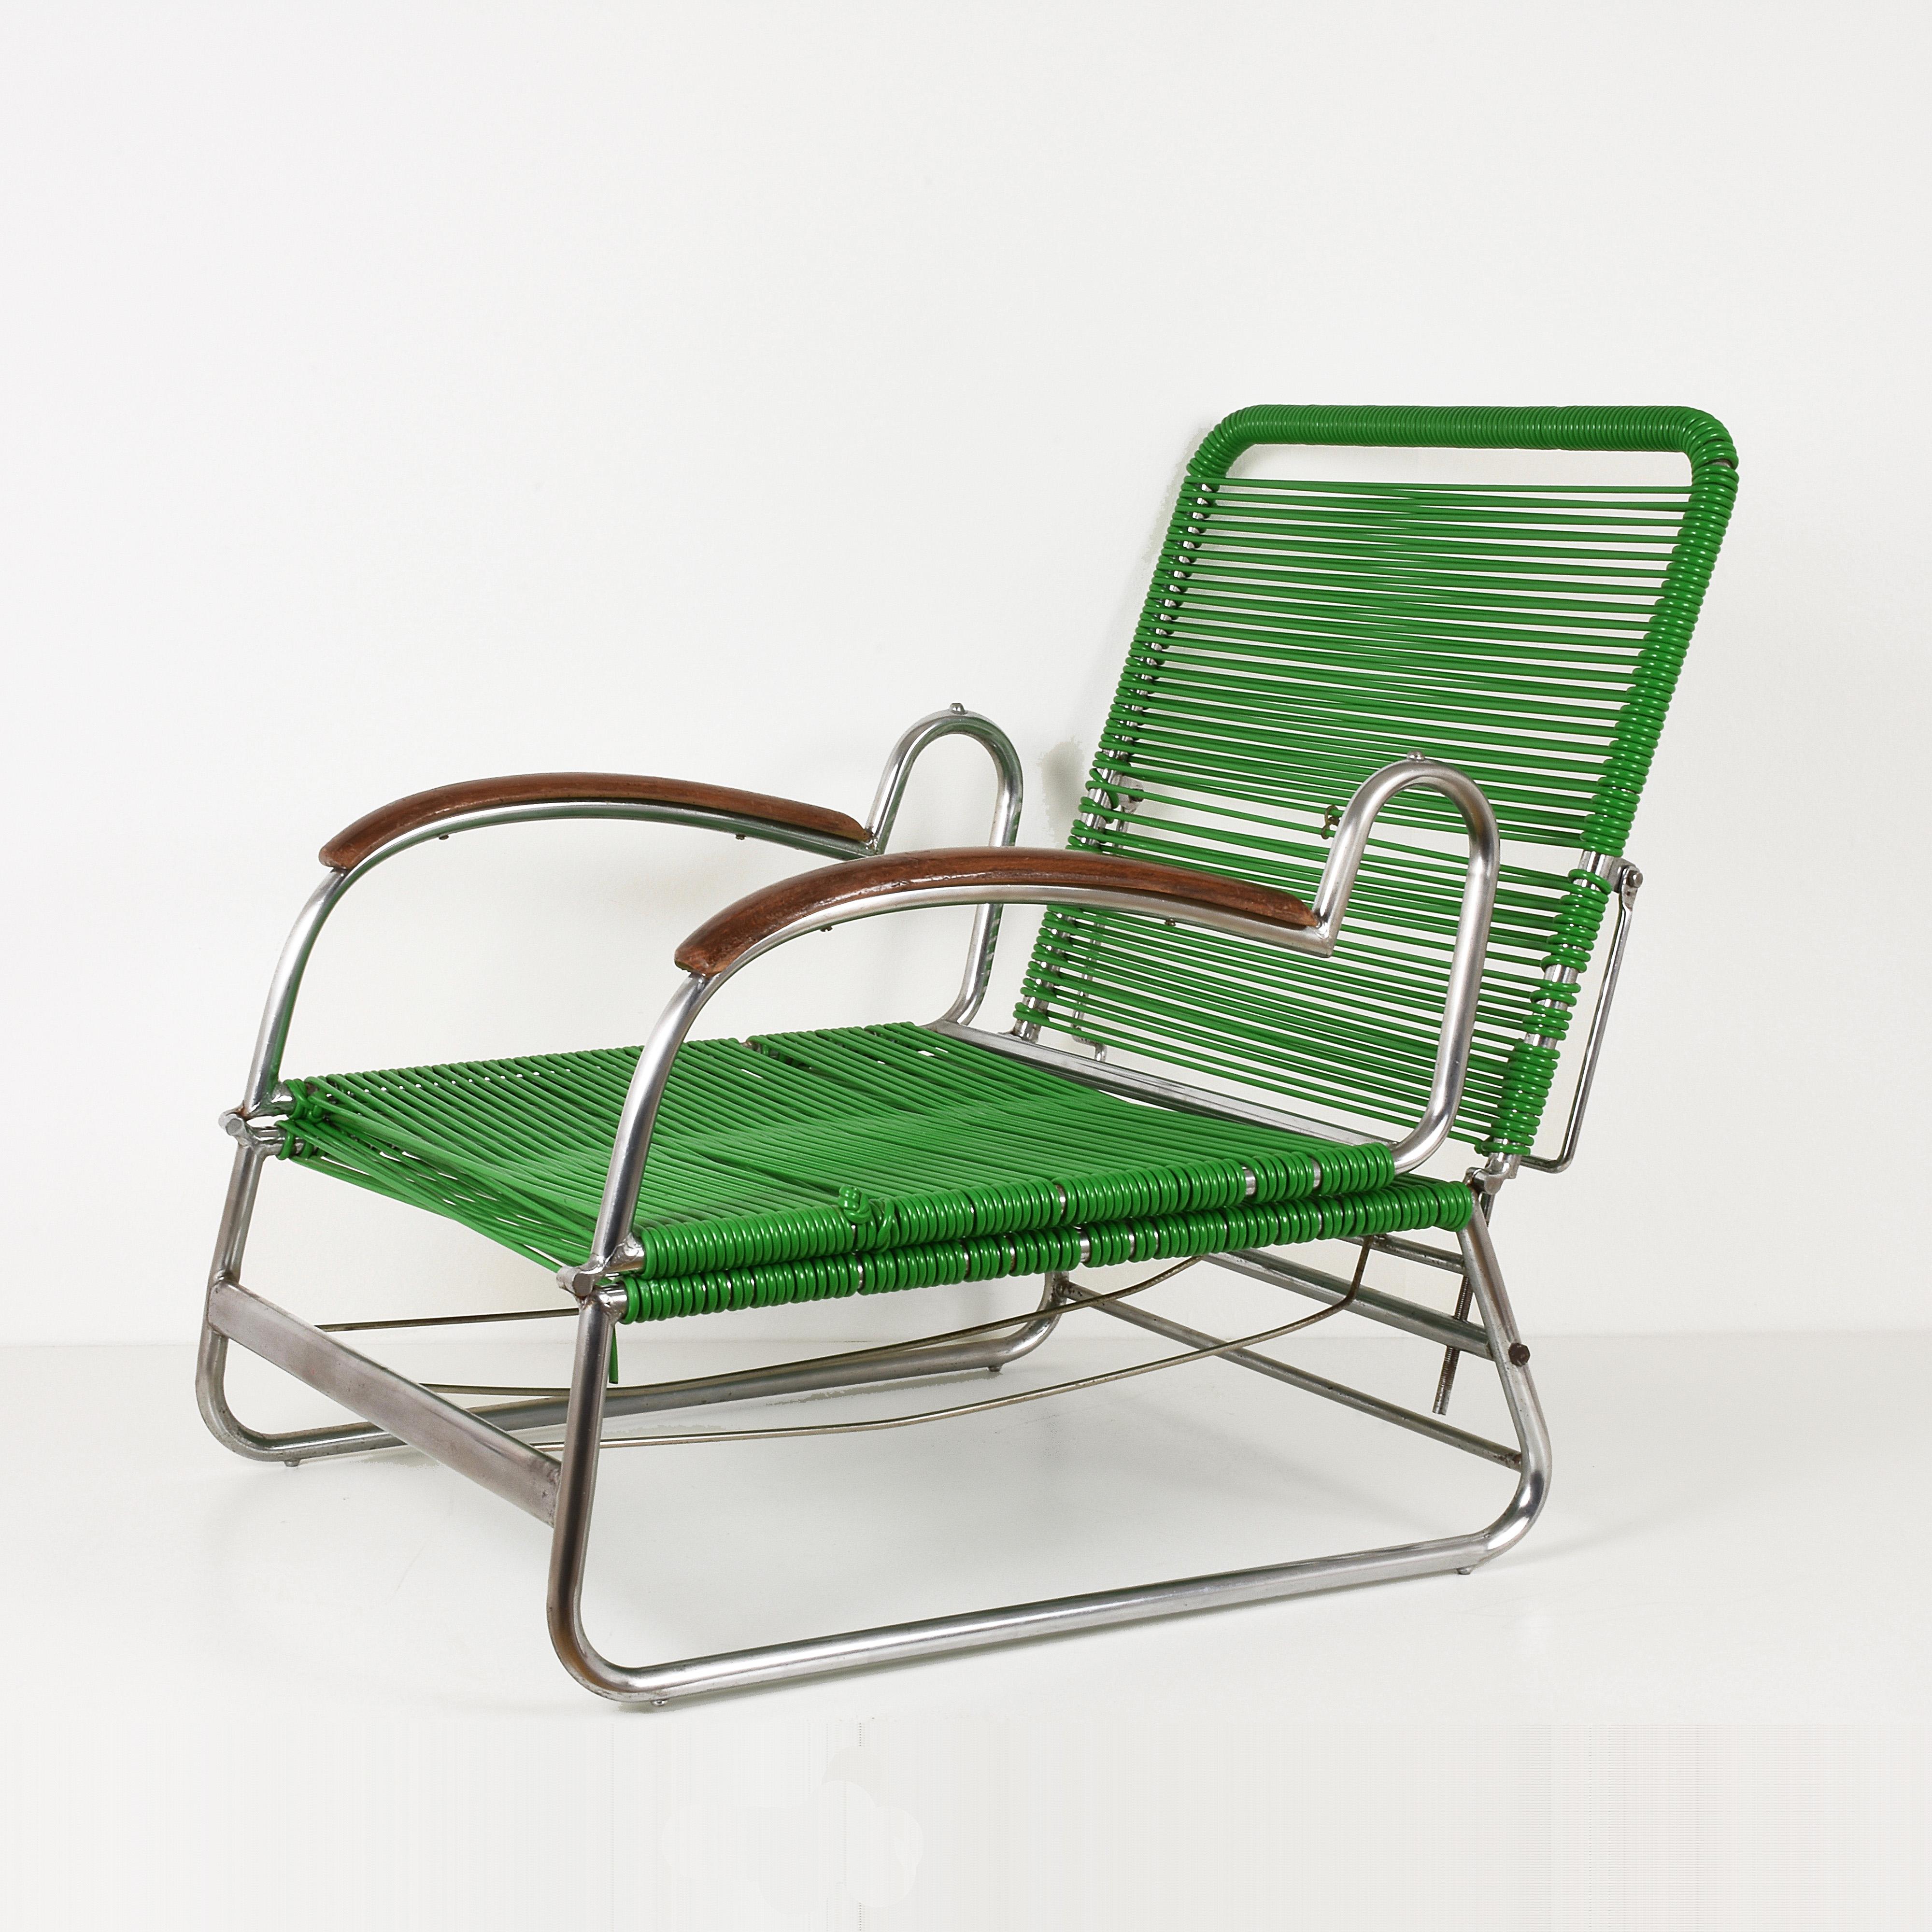 Italian Art Deco Chrome Metal and PVC Green Cord Armchair in Marcel Breuer Style, 1930s